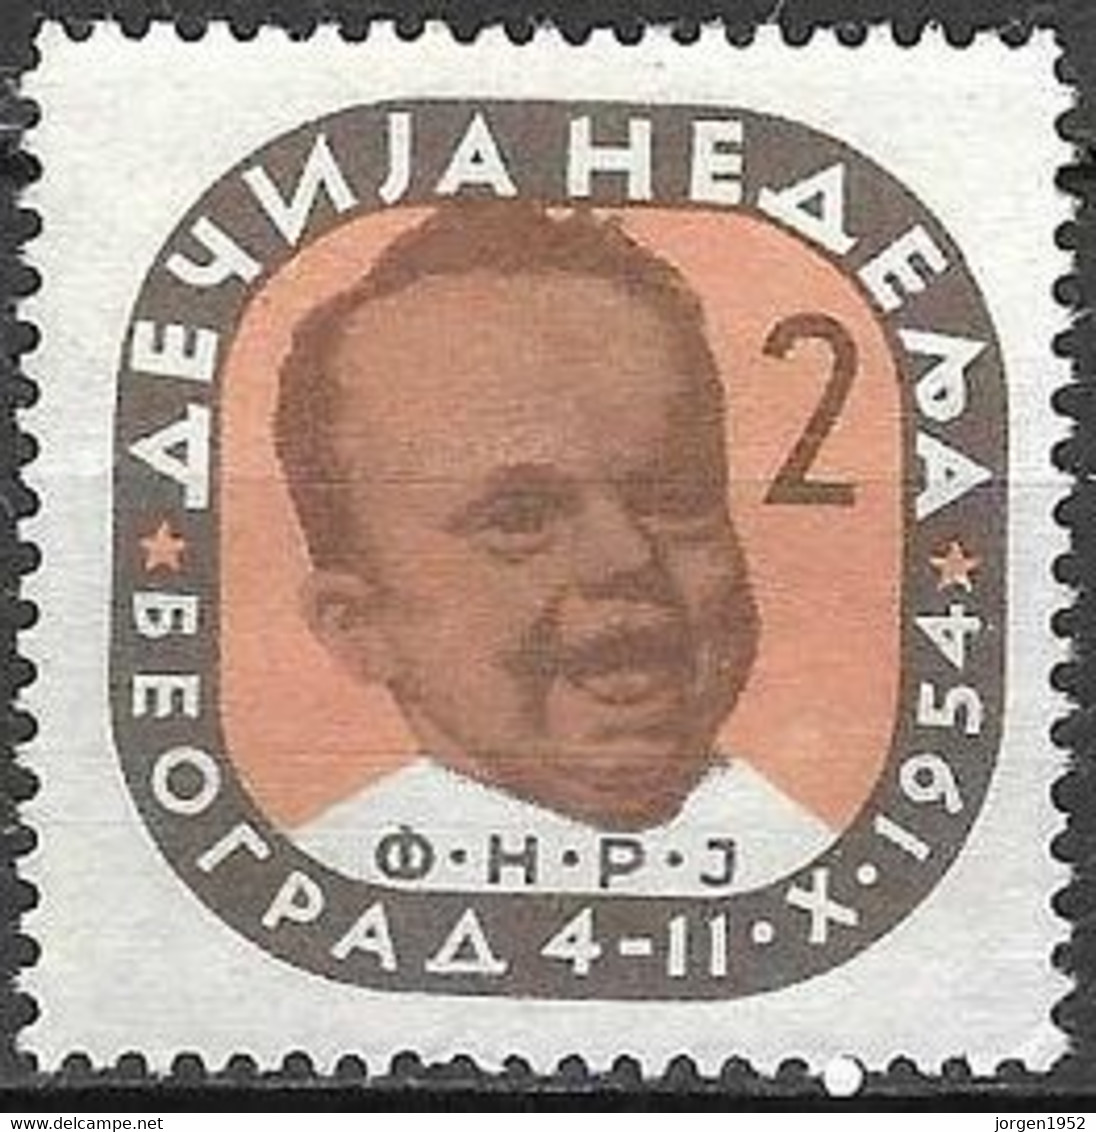 YUGOSLAVIA #  FROM 1954 MICHEL Z12 - Postage Due